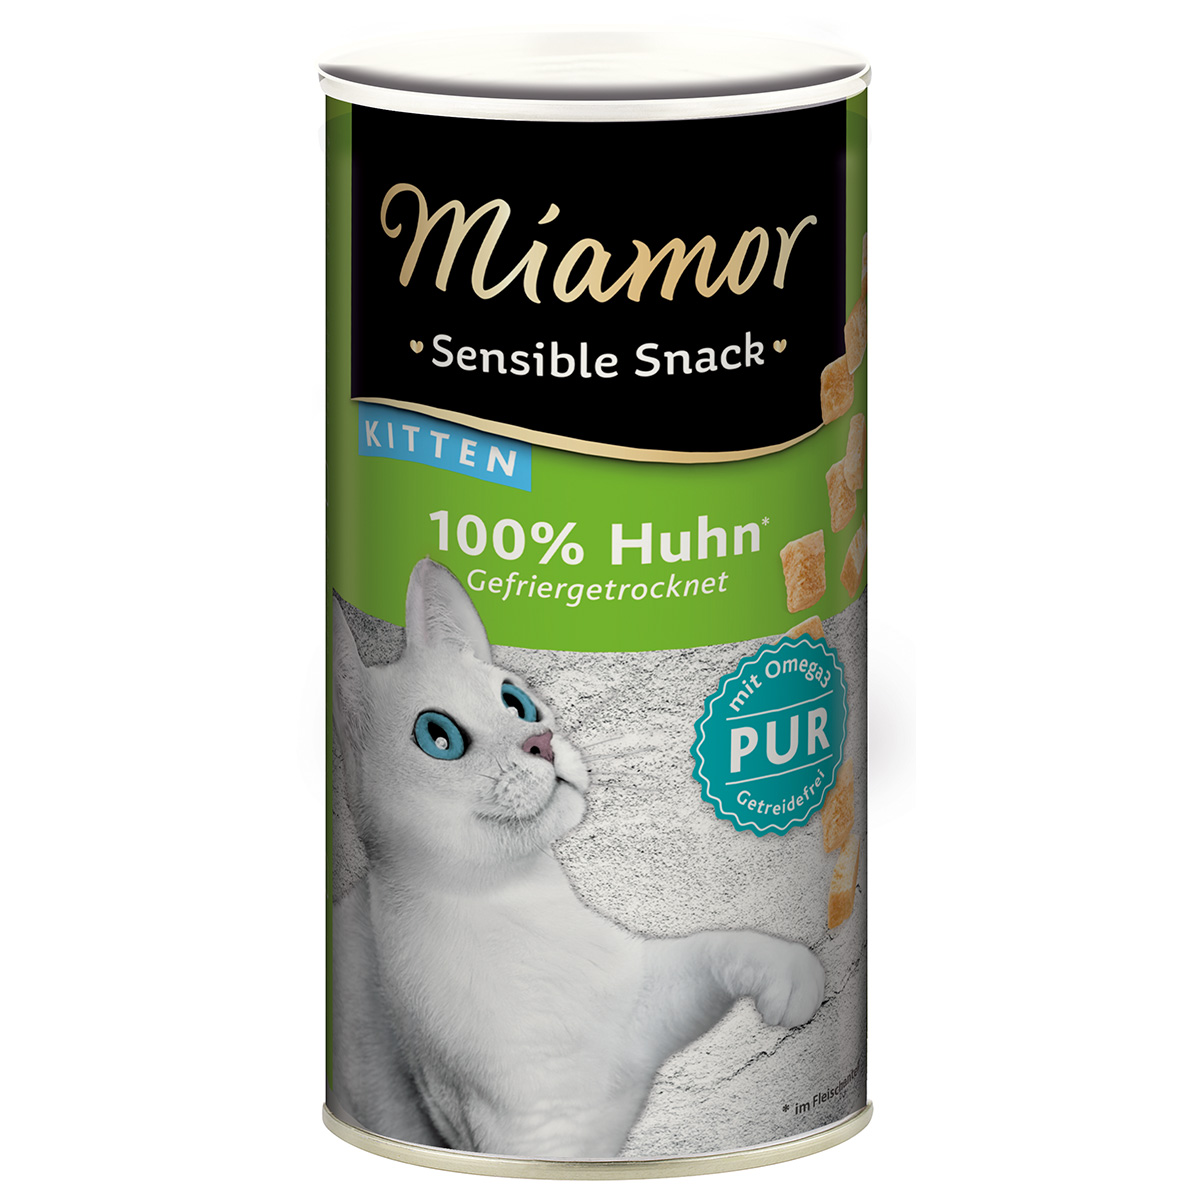 Miamor Sensible Snack Kitten Huhn Pur 30g